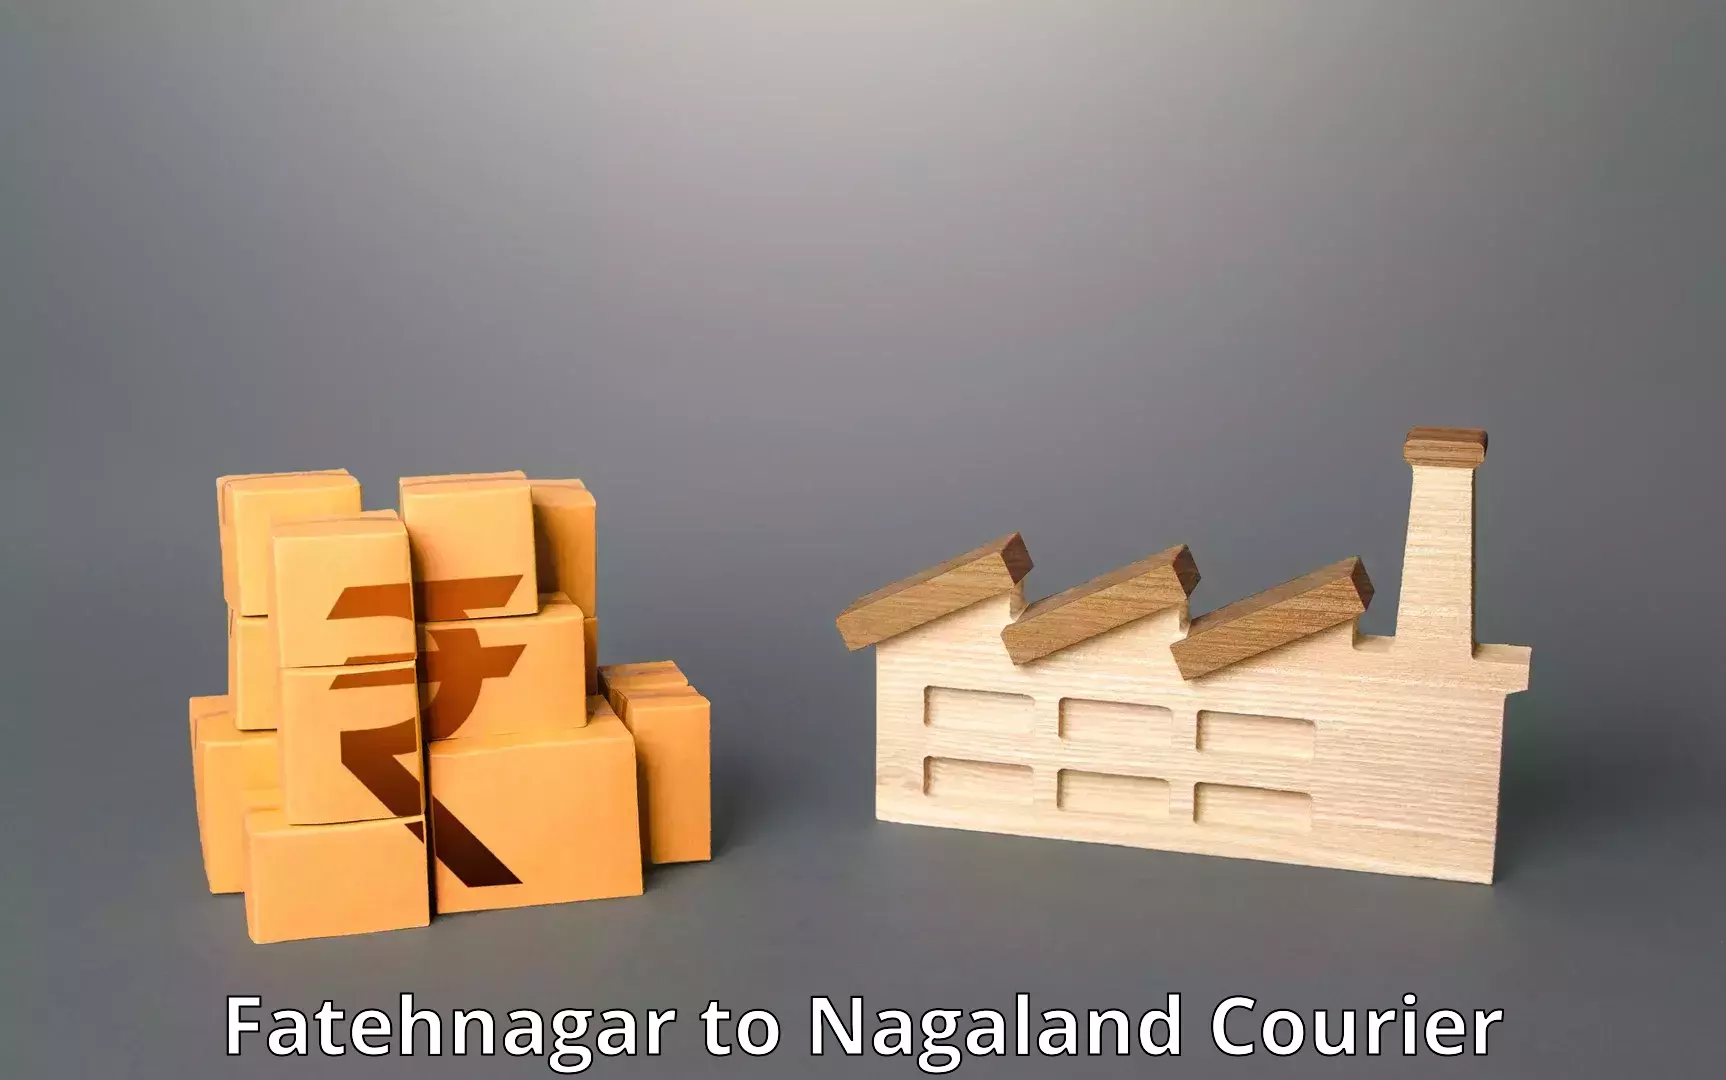 Express logistics service Fatehnagar to Nagaland